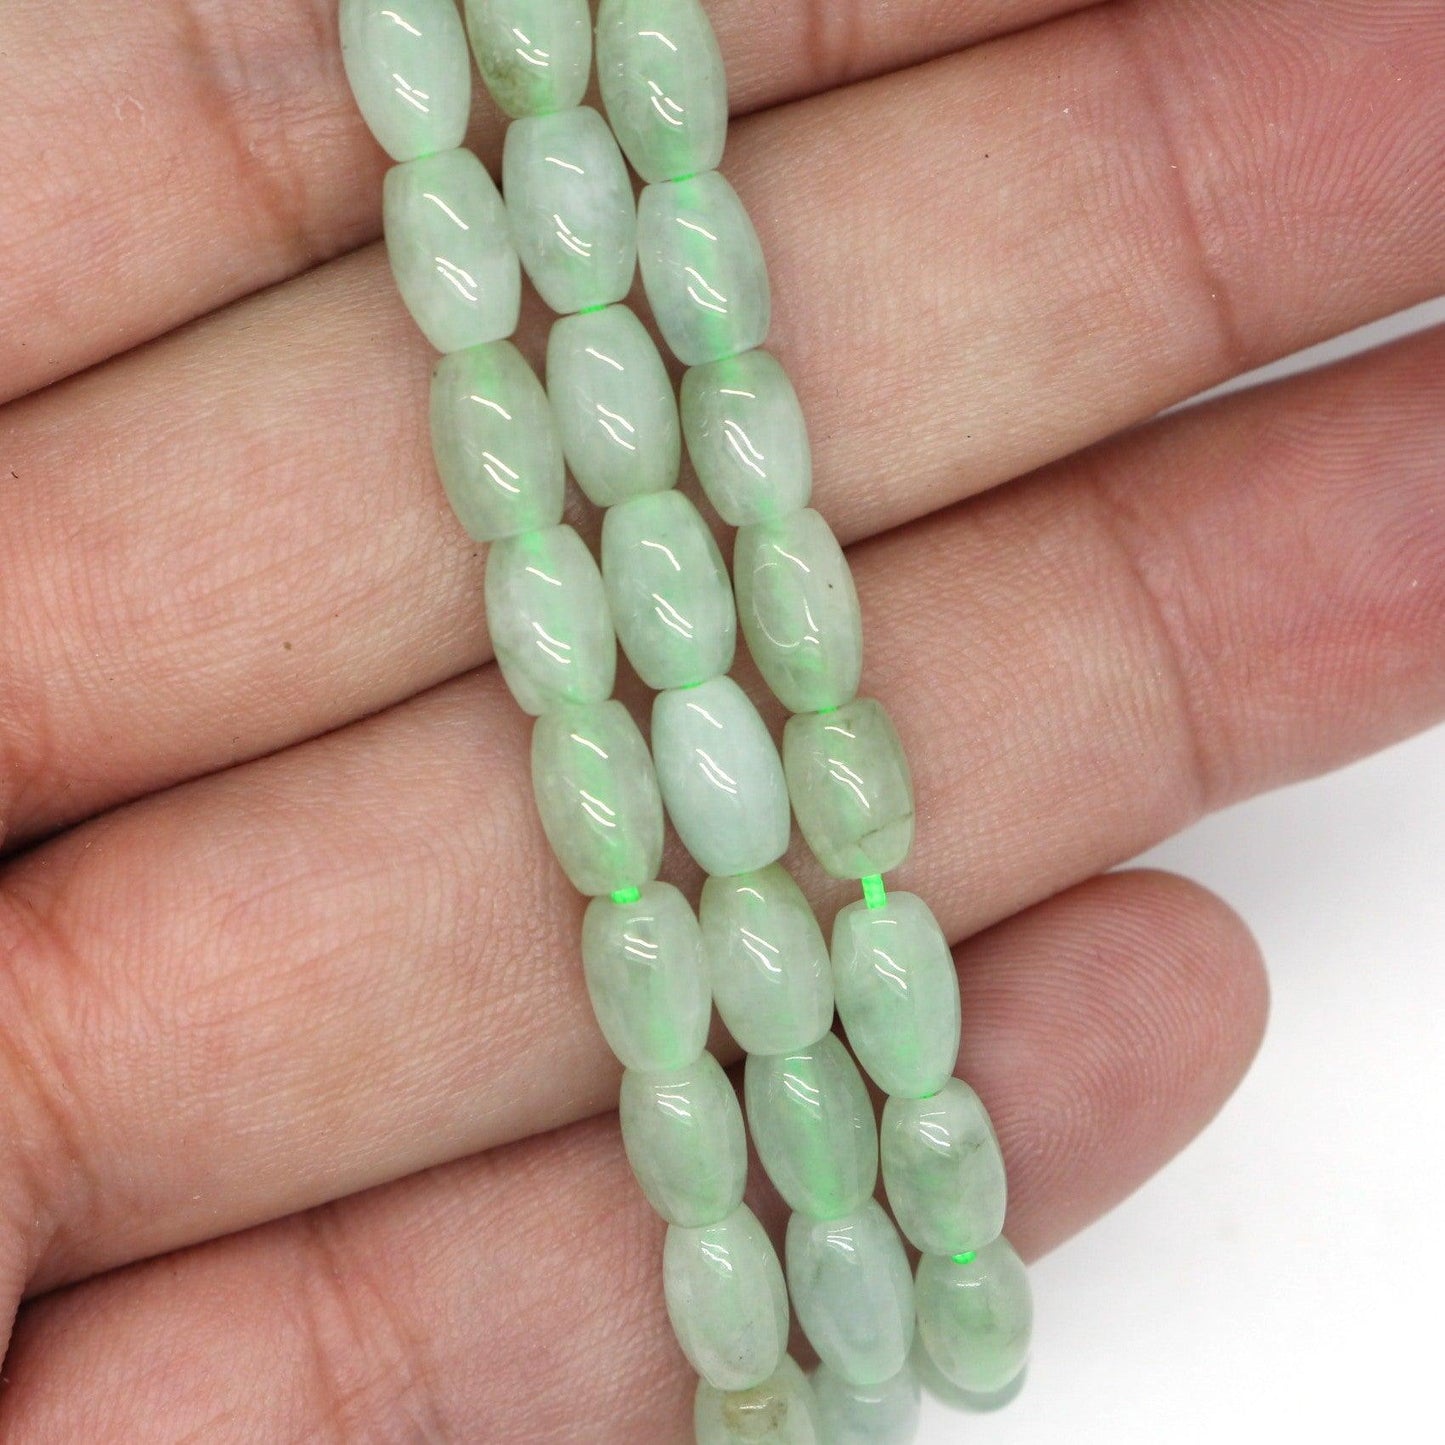 Type A Jadeite Jade Necklace Series - Jade-collector.com